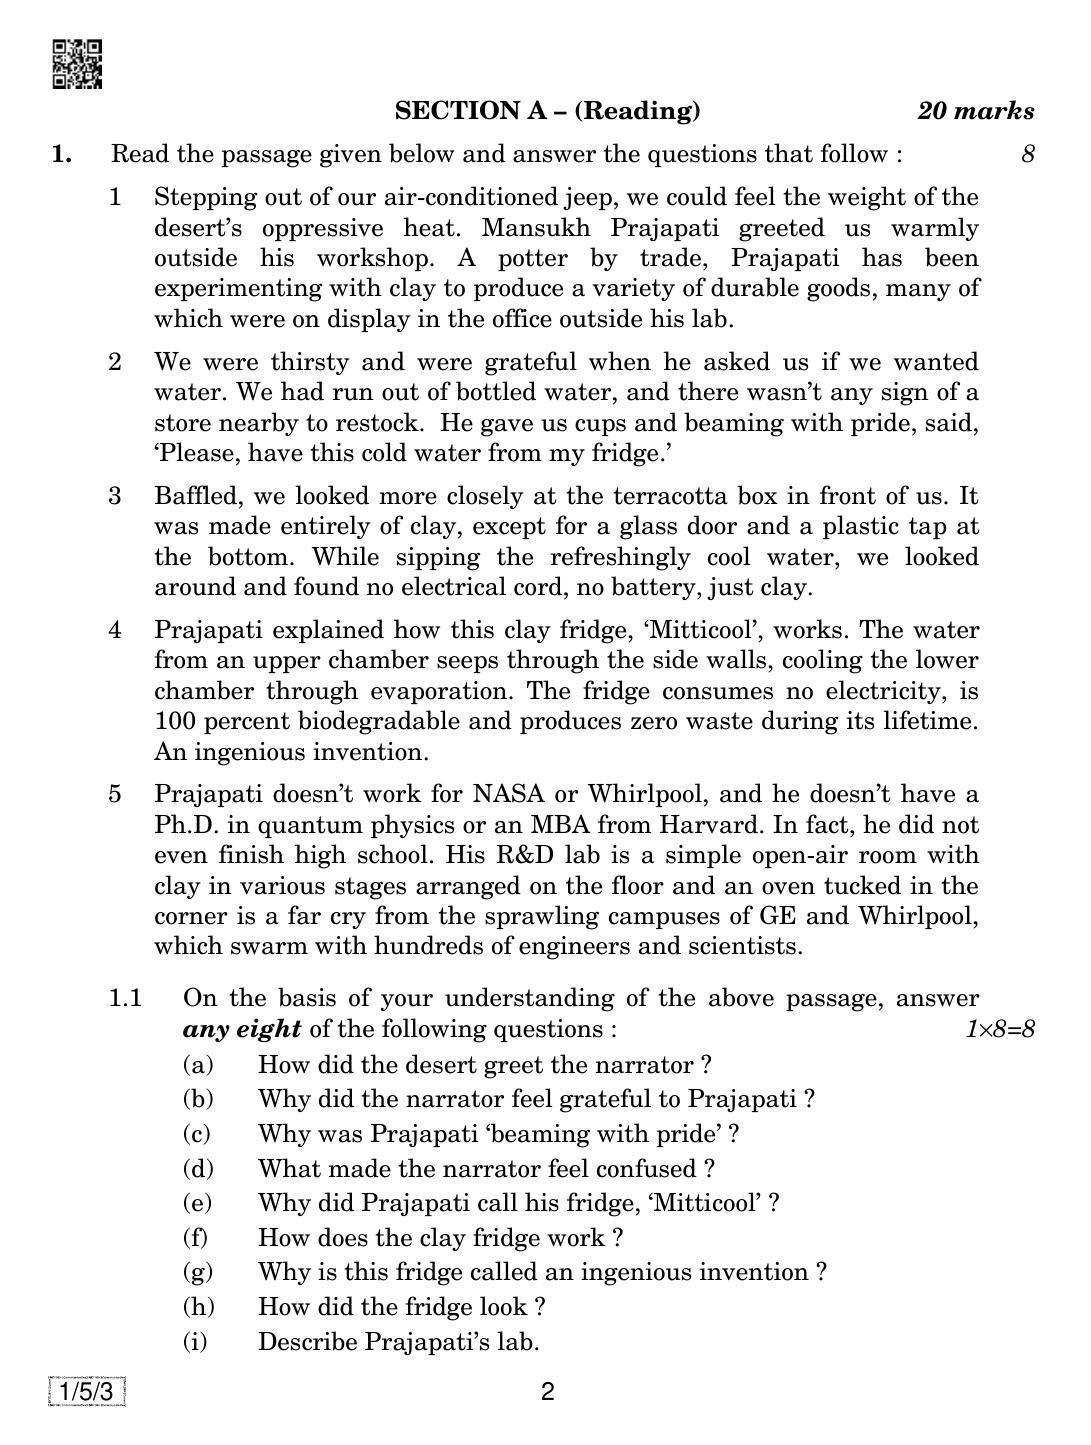 CBSE Class 10 1-5-3 ENGLISH COMMUNICATIVE 2019 Question Paper - Page 2